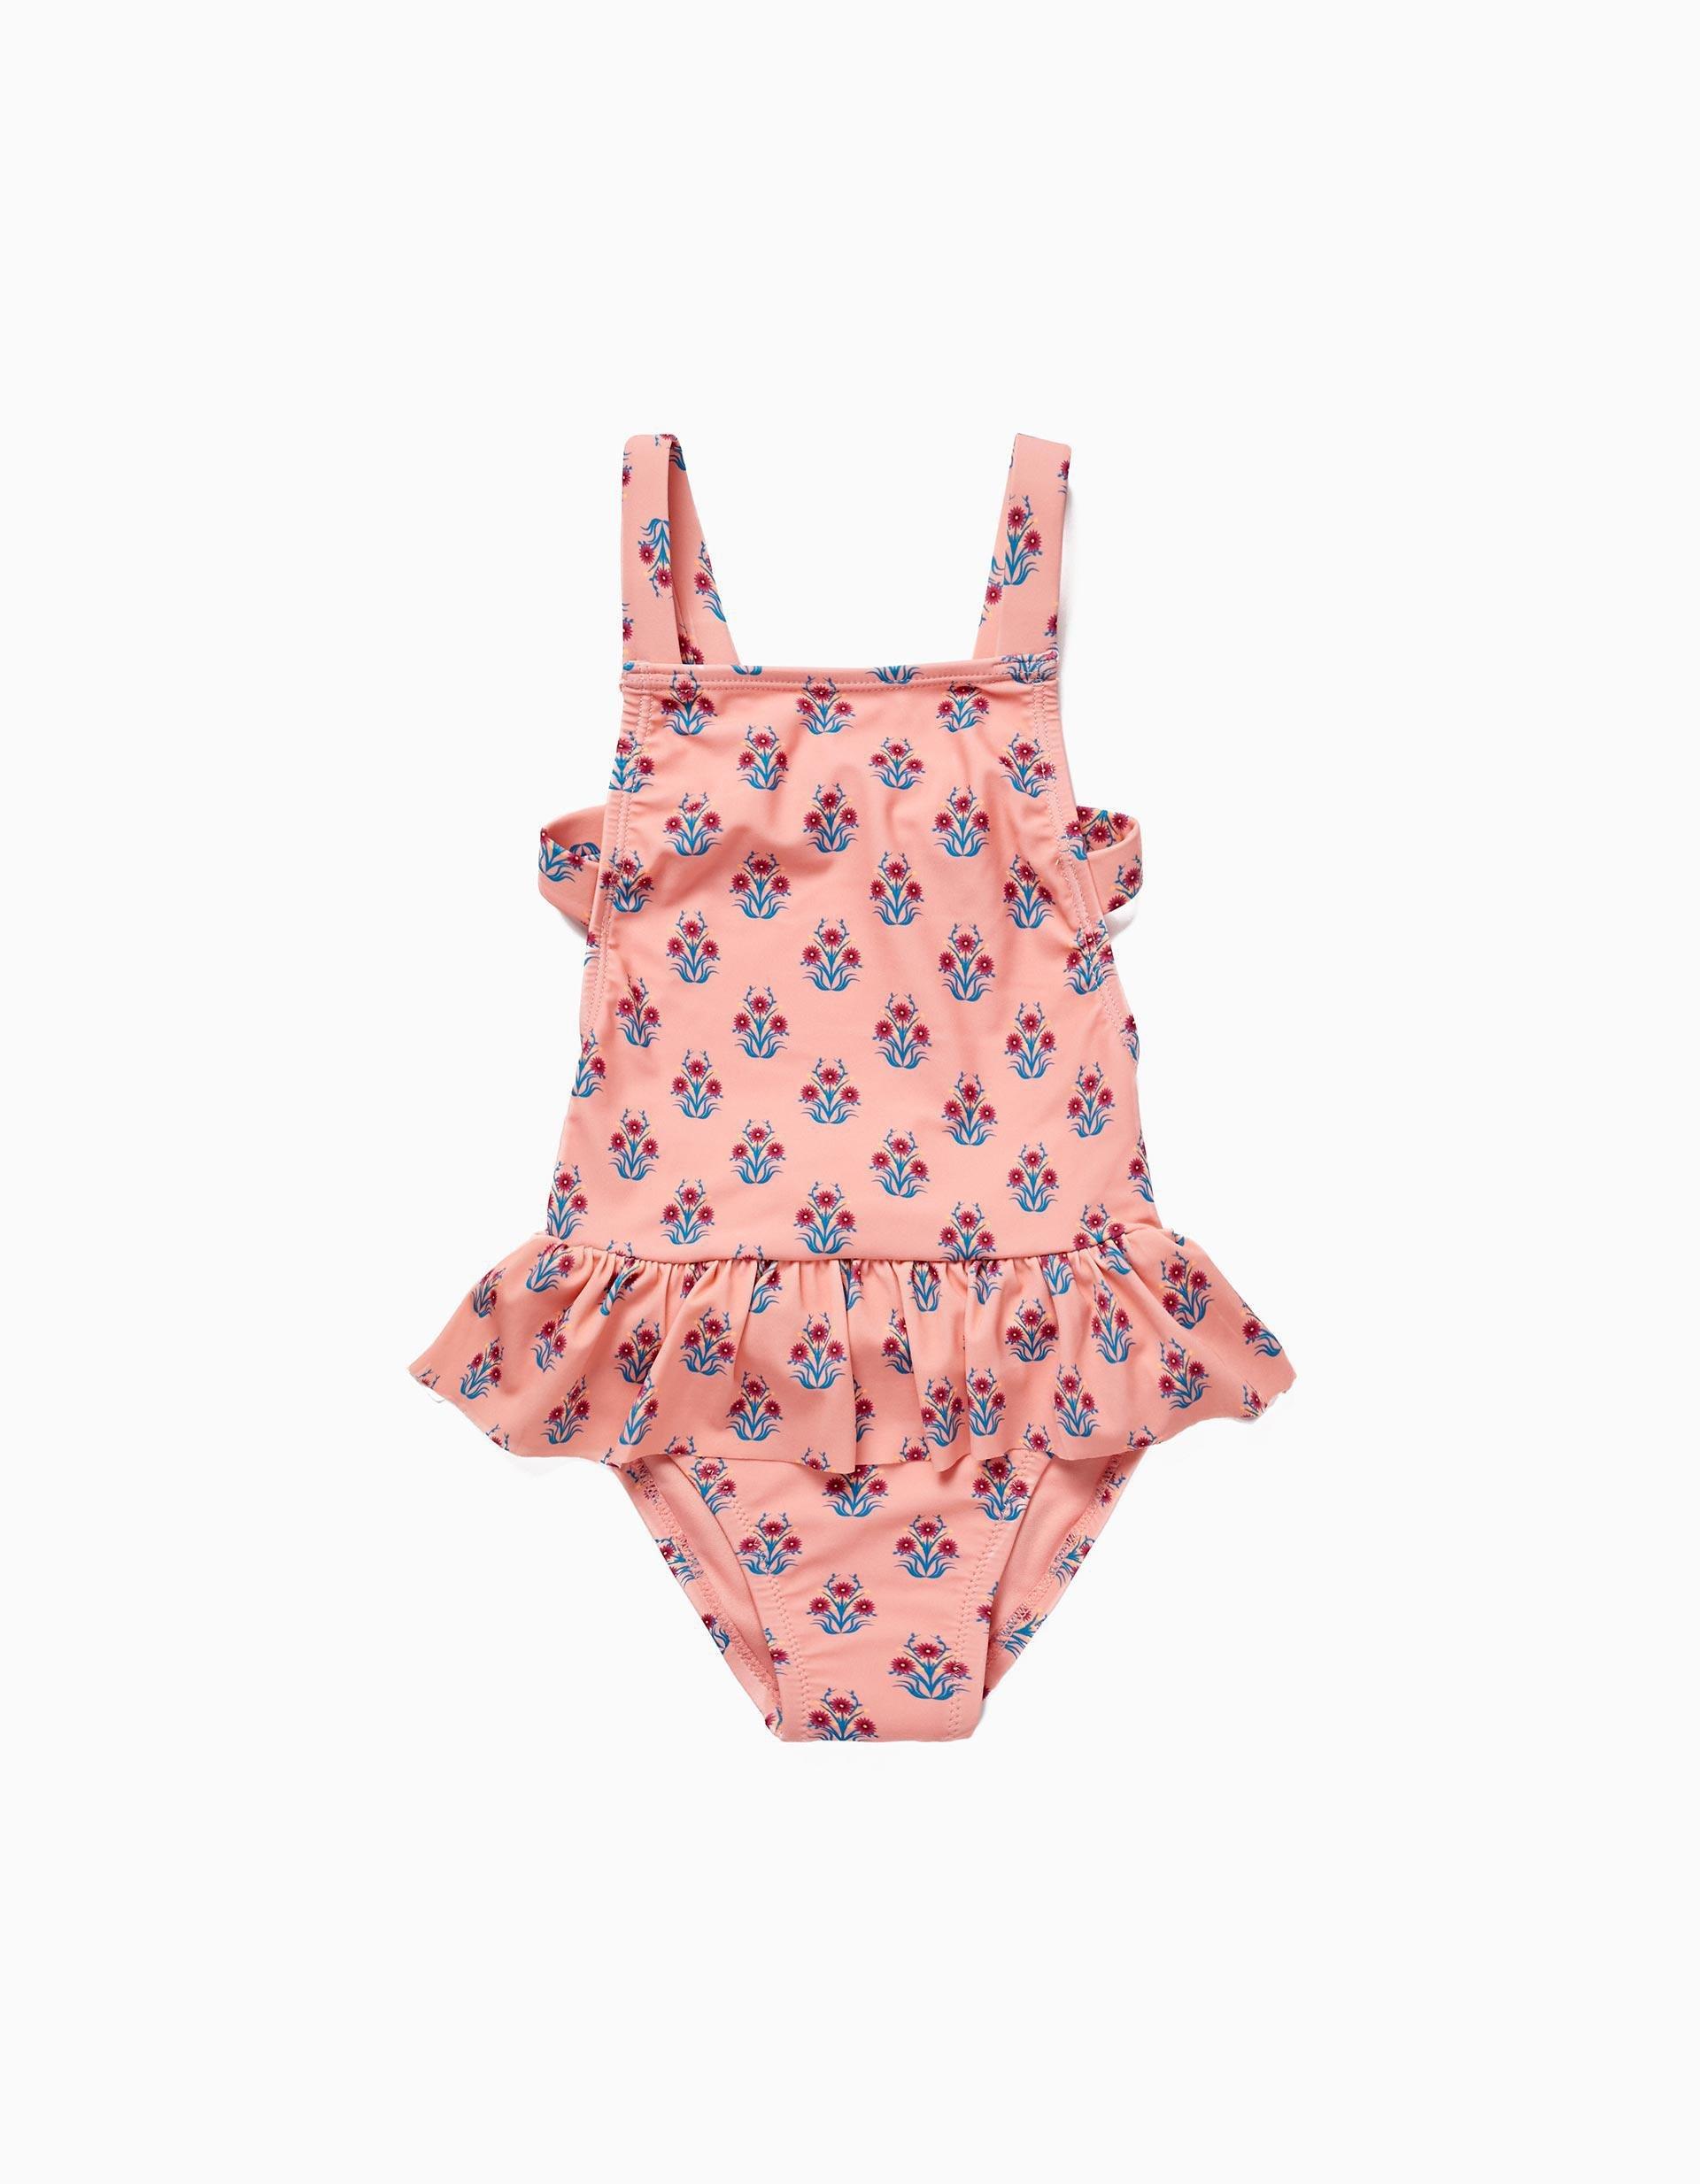 Gant - Pink Frilly Swimsuit, Kids Girls